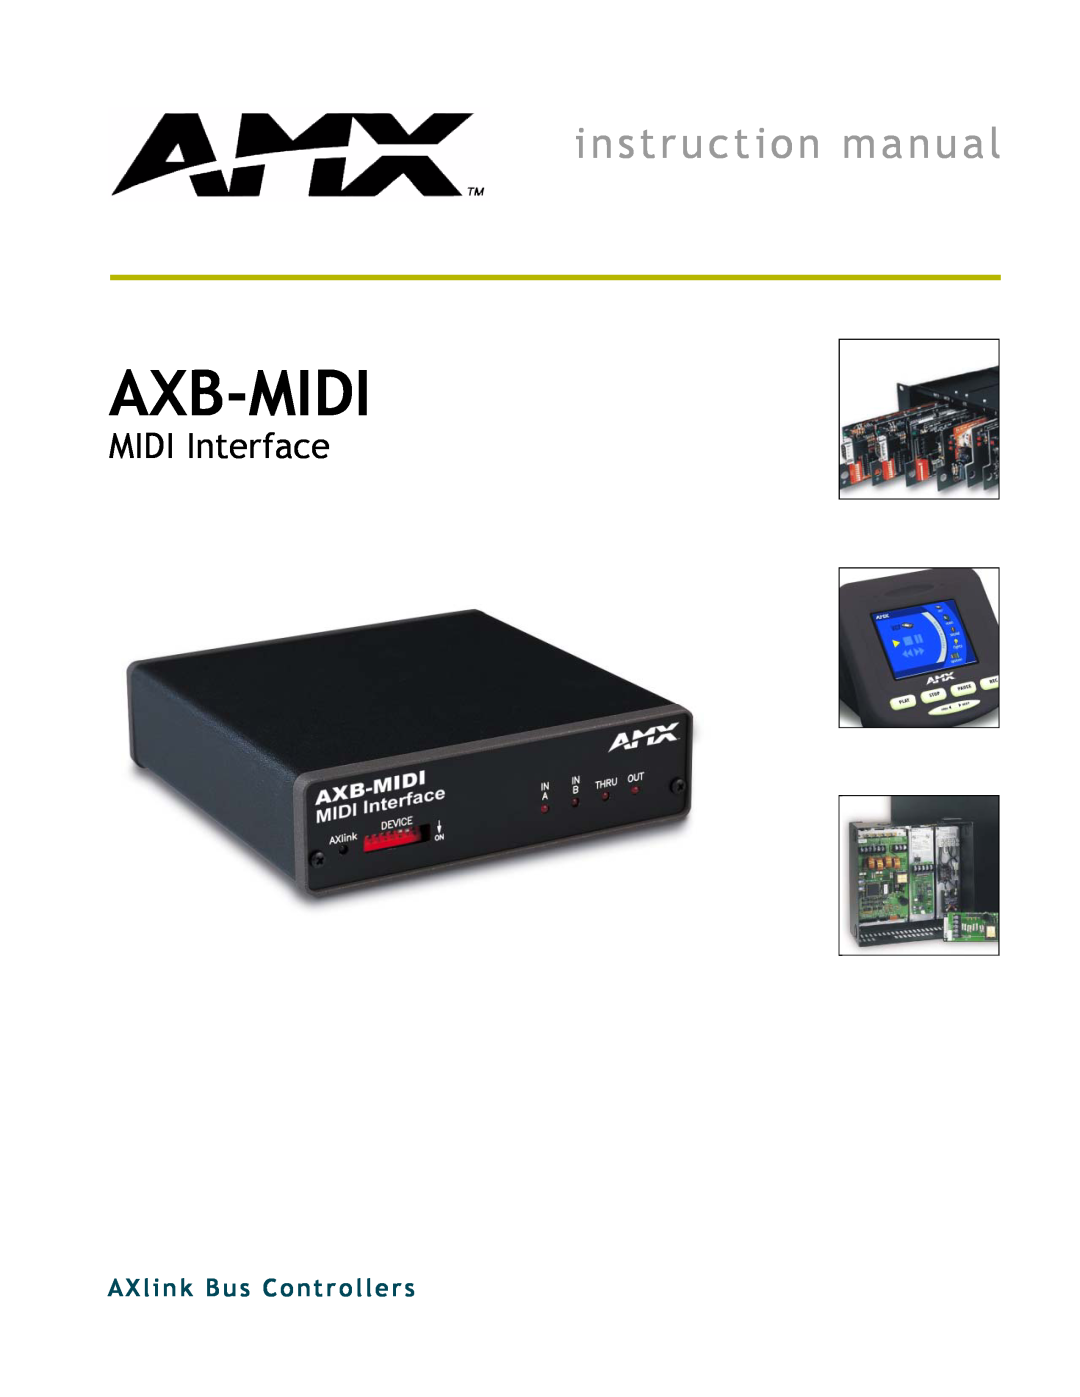 AMX AXB-MIDI instruction manual Axb-Midi, MIDI Interface, AXlink Bus Controllers 